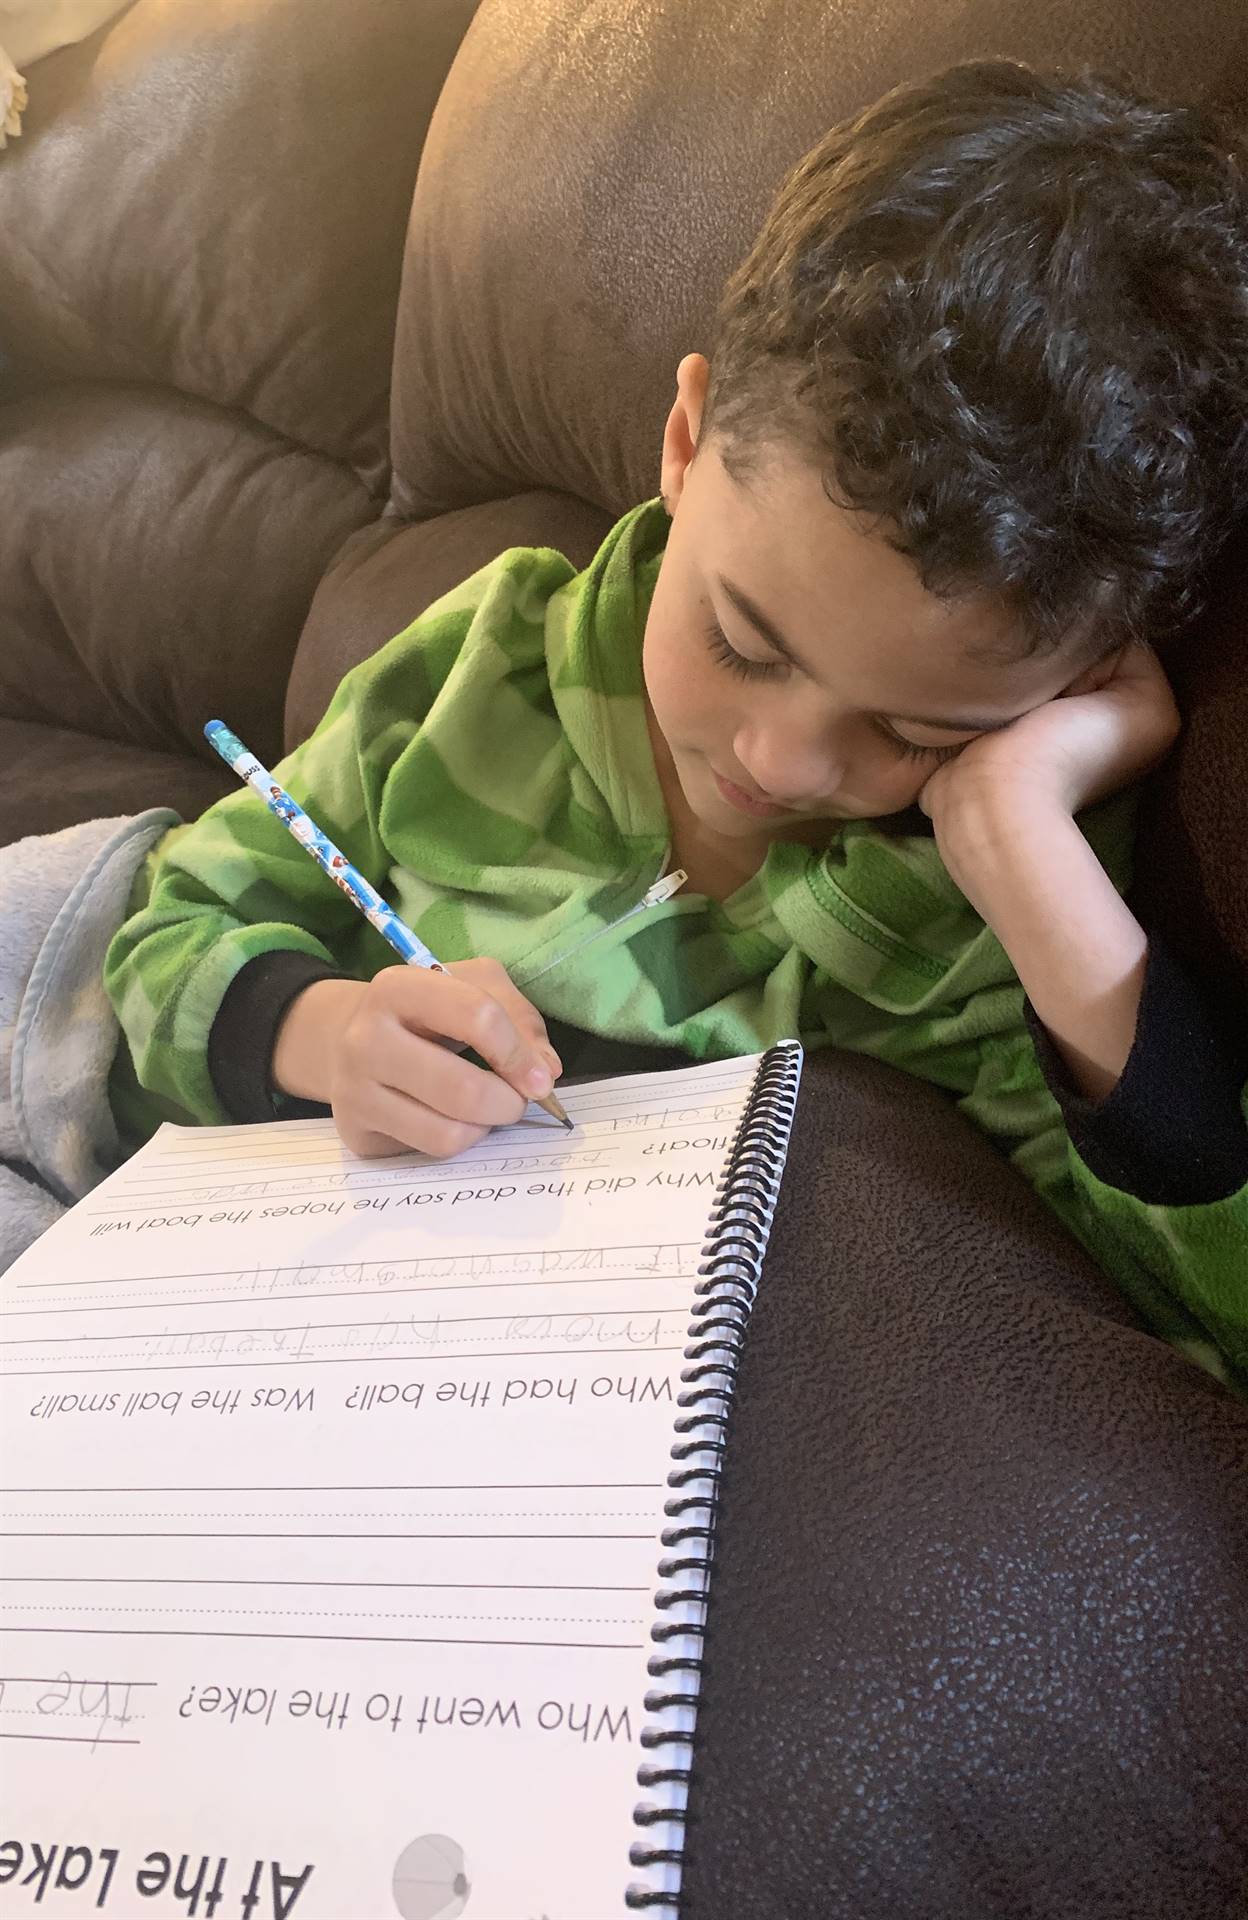 A boy doing writing.